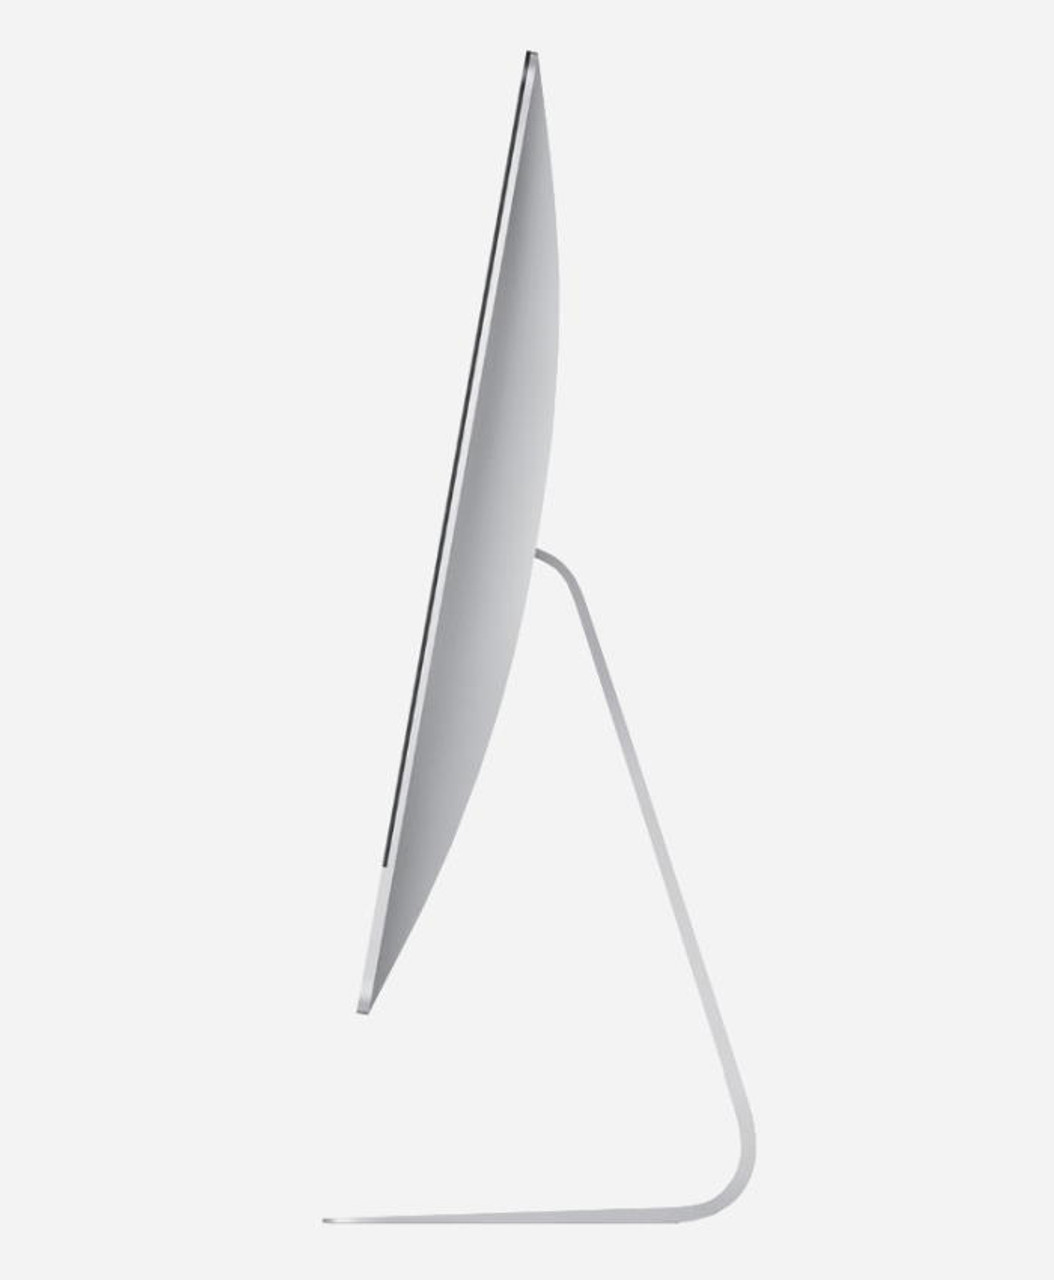 Used Apple iMac 27-inch (Retina 5K) 4.2GHZ Quad Core i7 (Mid 2017 